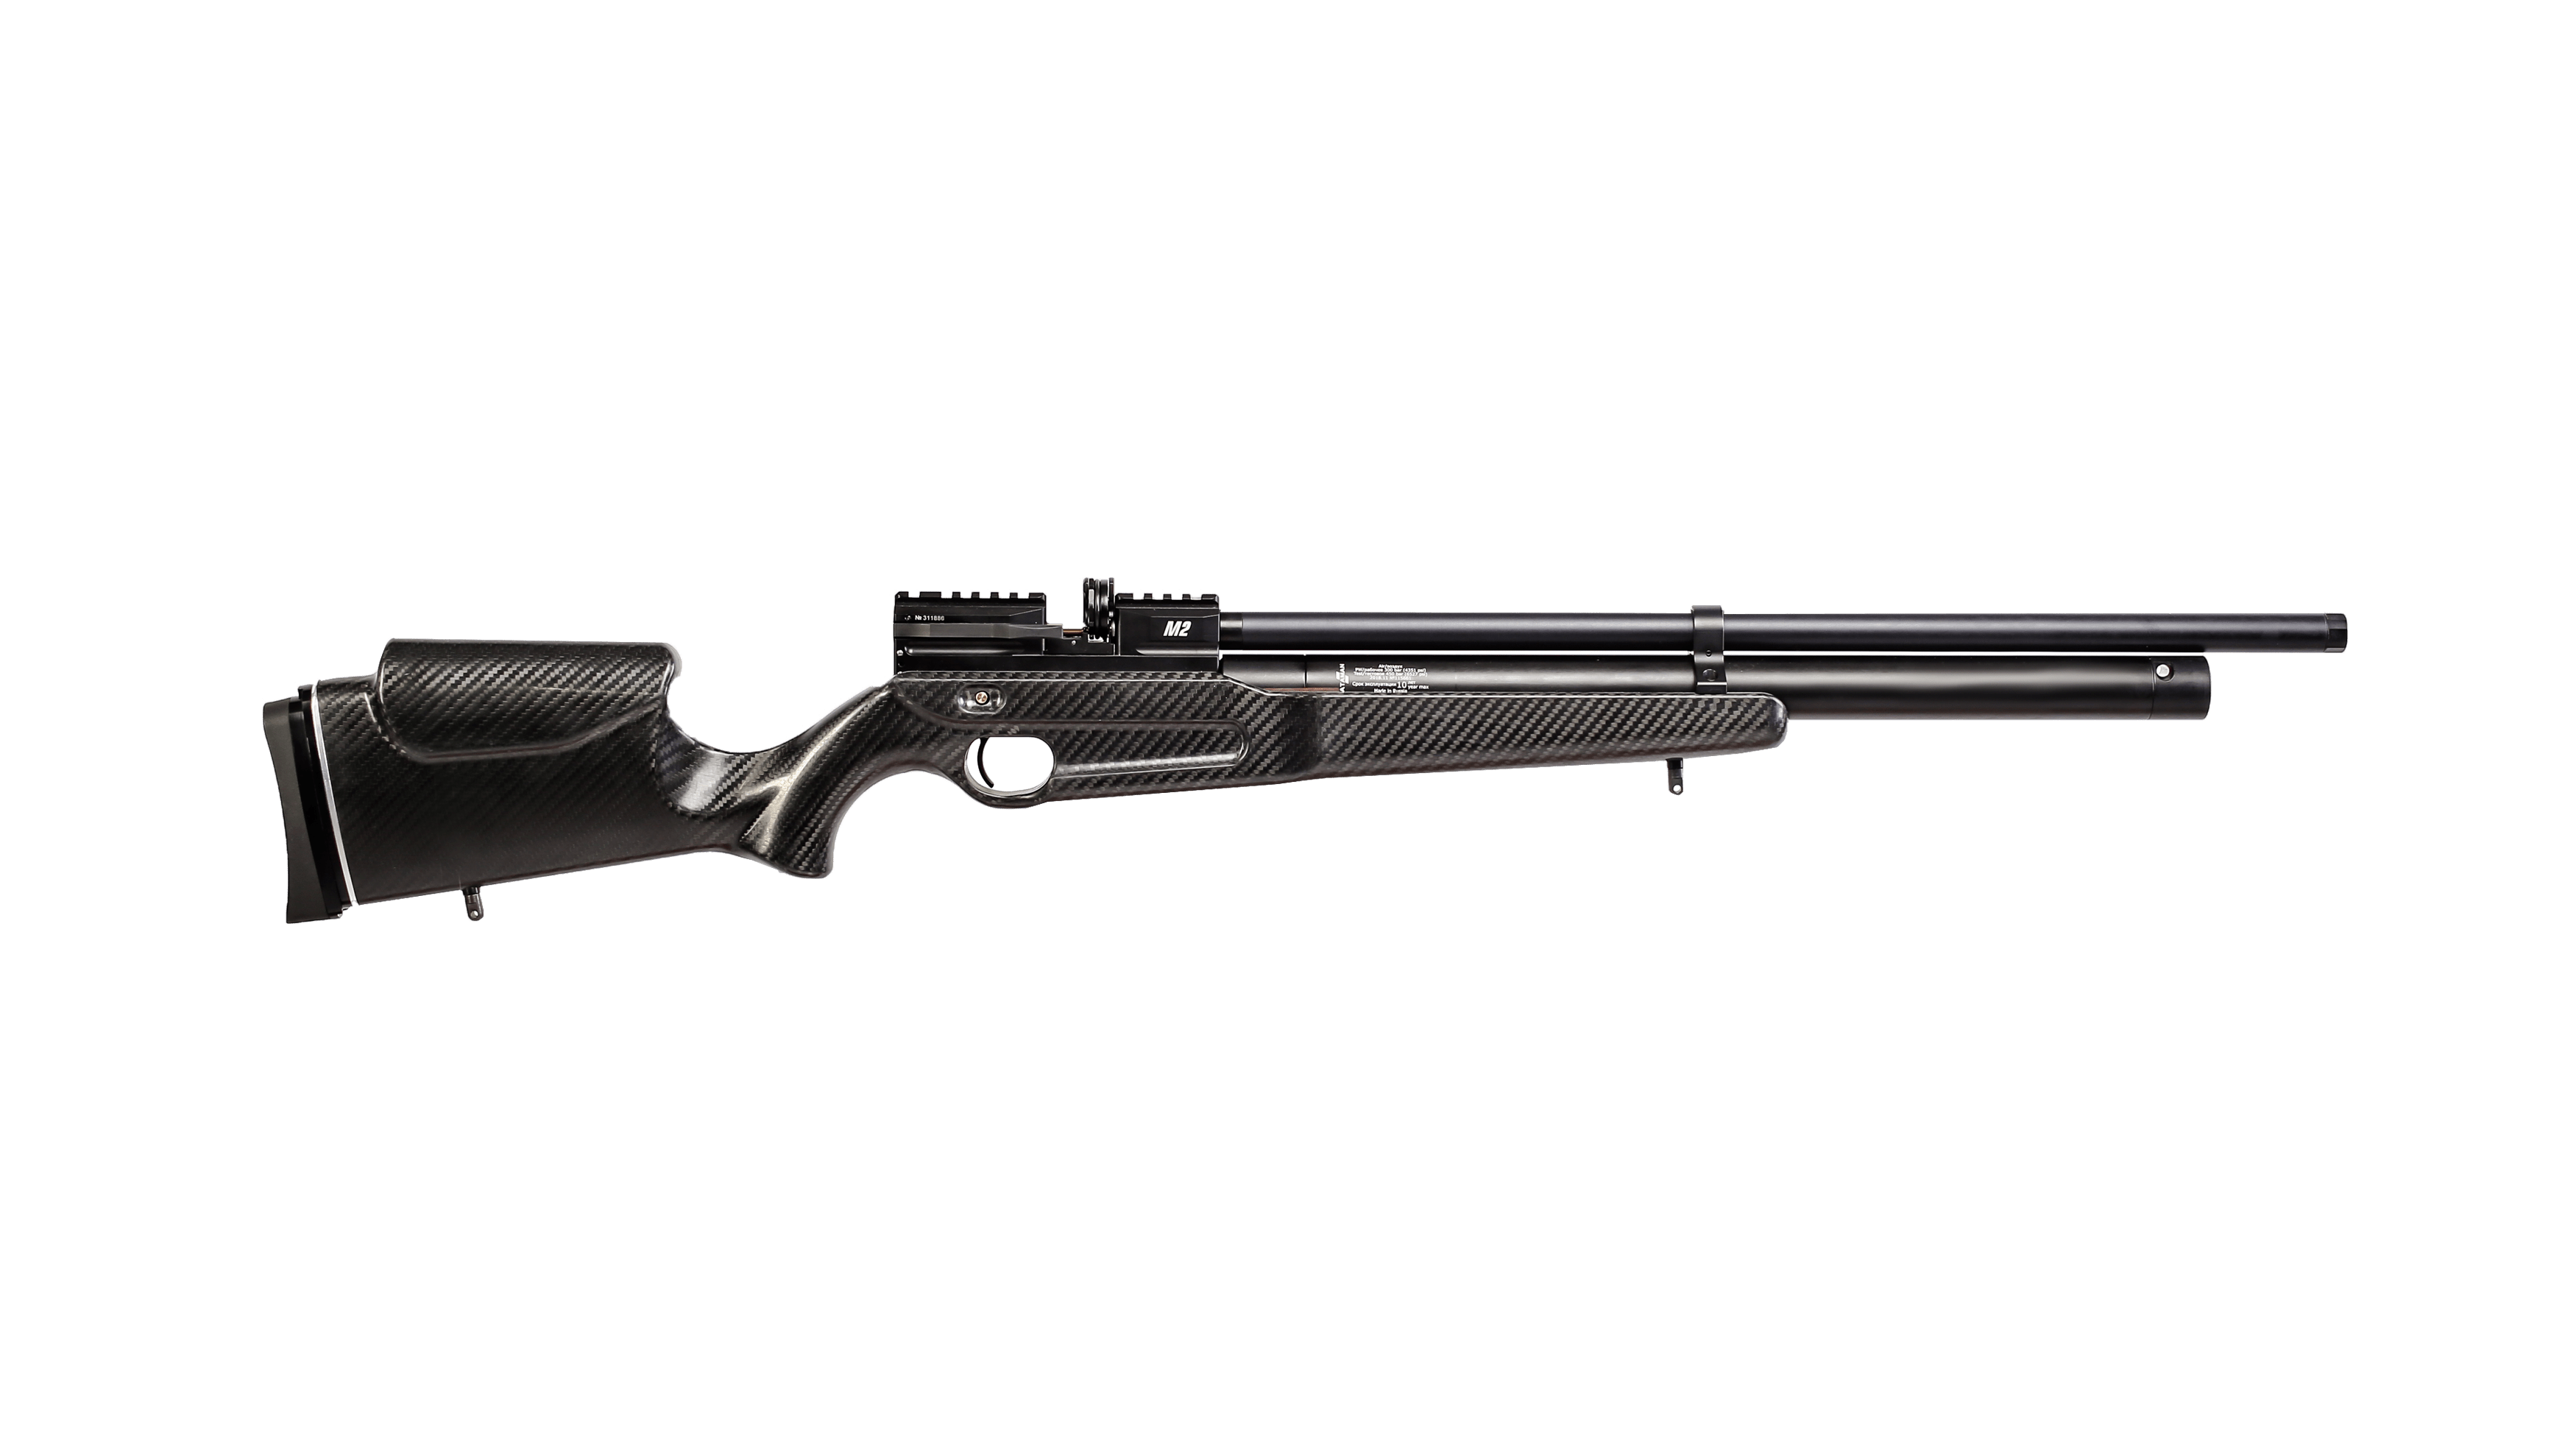 Пневматическая PCP винтовка ATAMAN M2R Карабин, кал.6,35мм (Walnut)